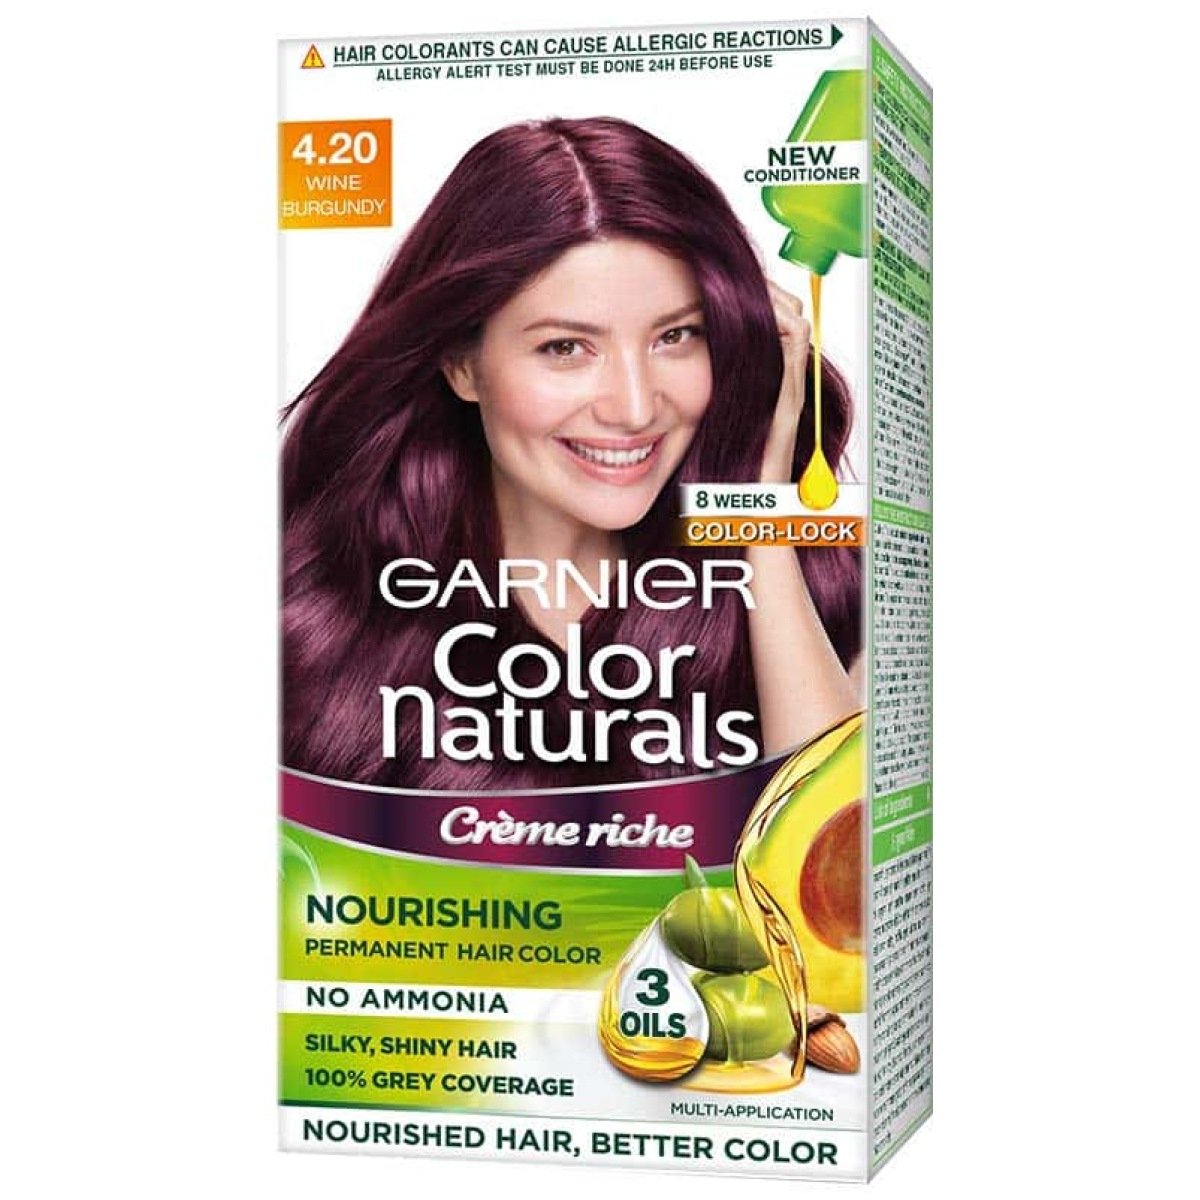 Garnier Color Naturals Creme Riche Hair Color 4.20 Wine Burgundy (70Ml+60G)